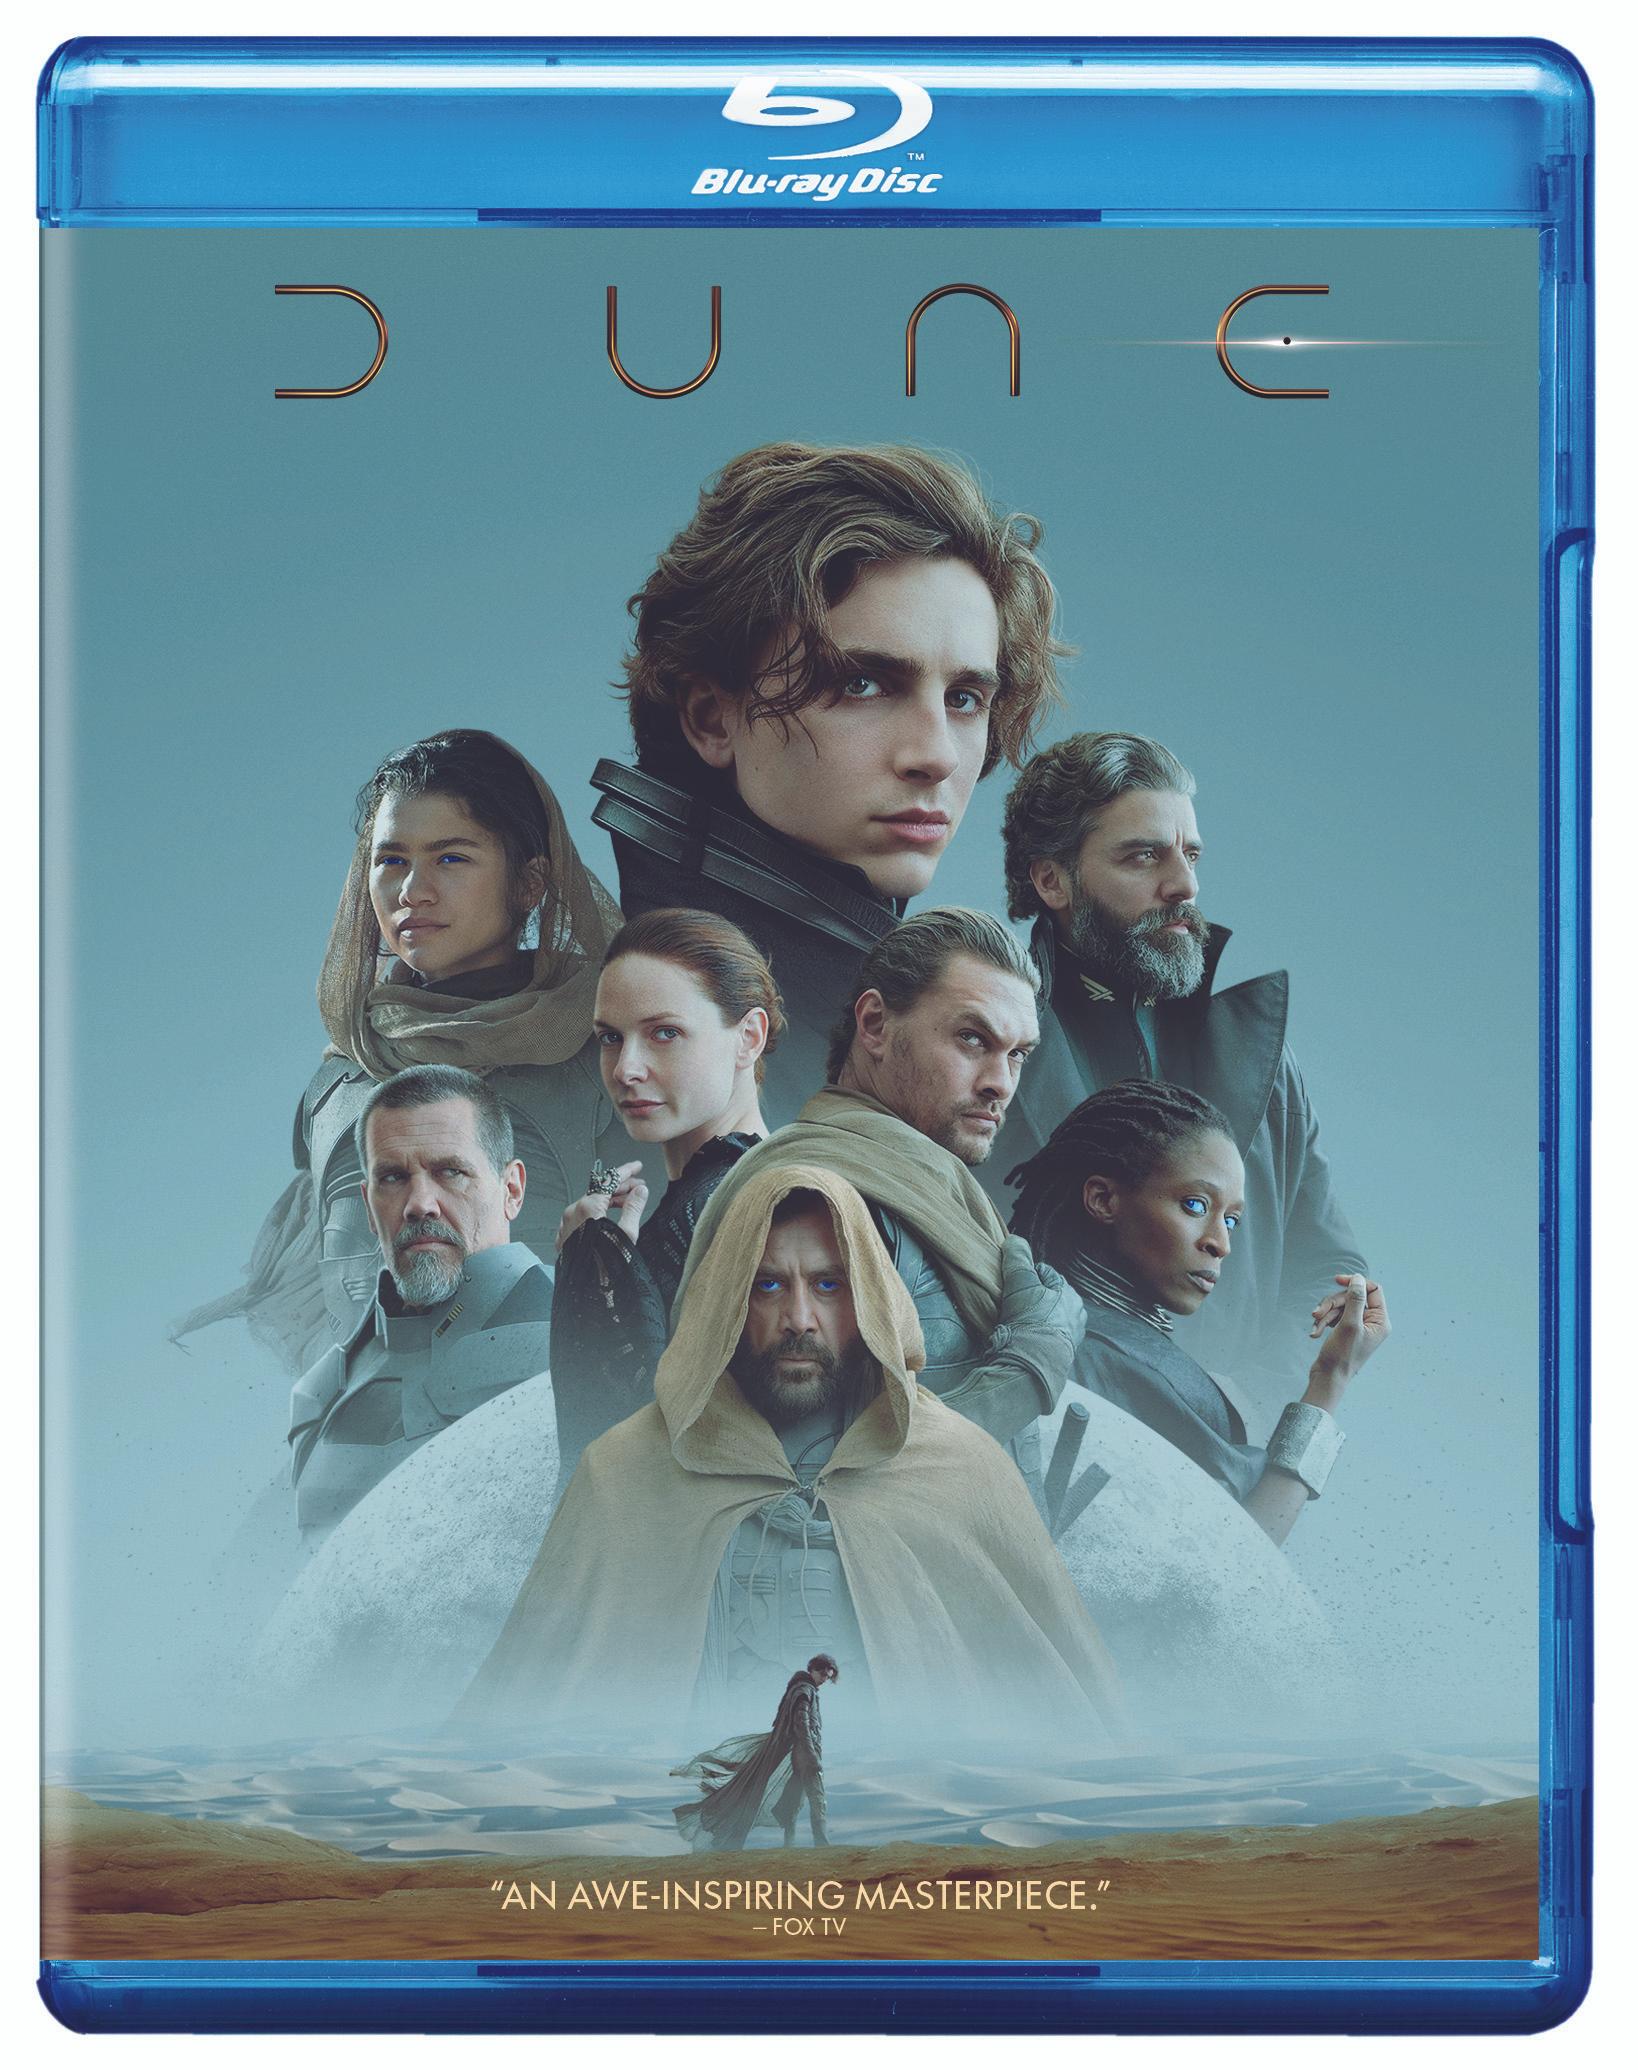 Dune (with DVD) - Blu-ray [ 2021 ]  - Sci Fi Movies On Blu-ray - Movies On GRUV